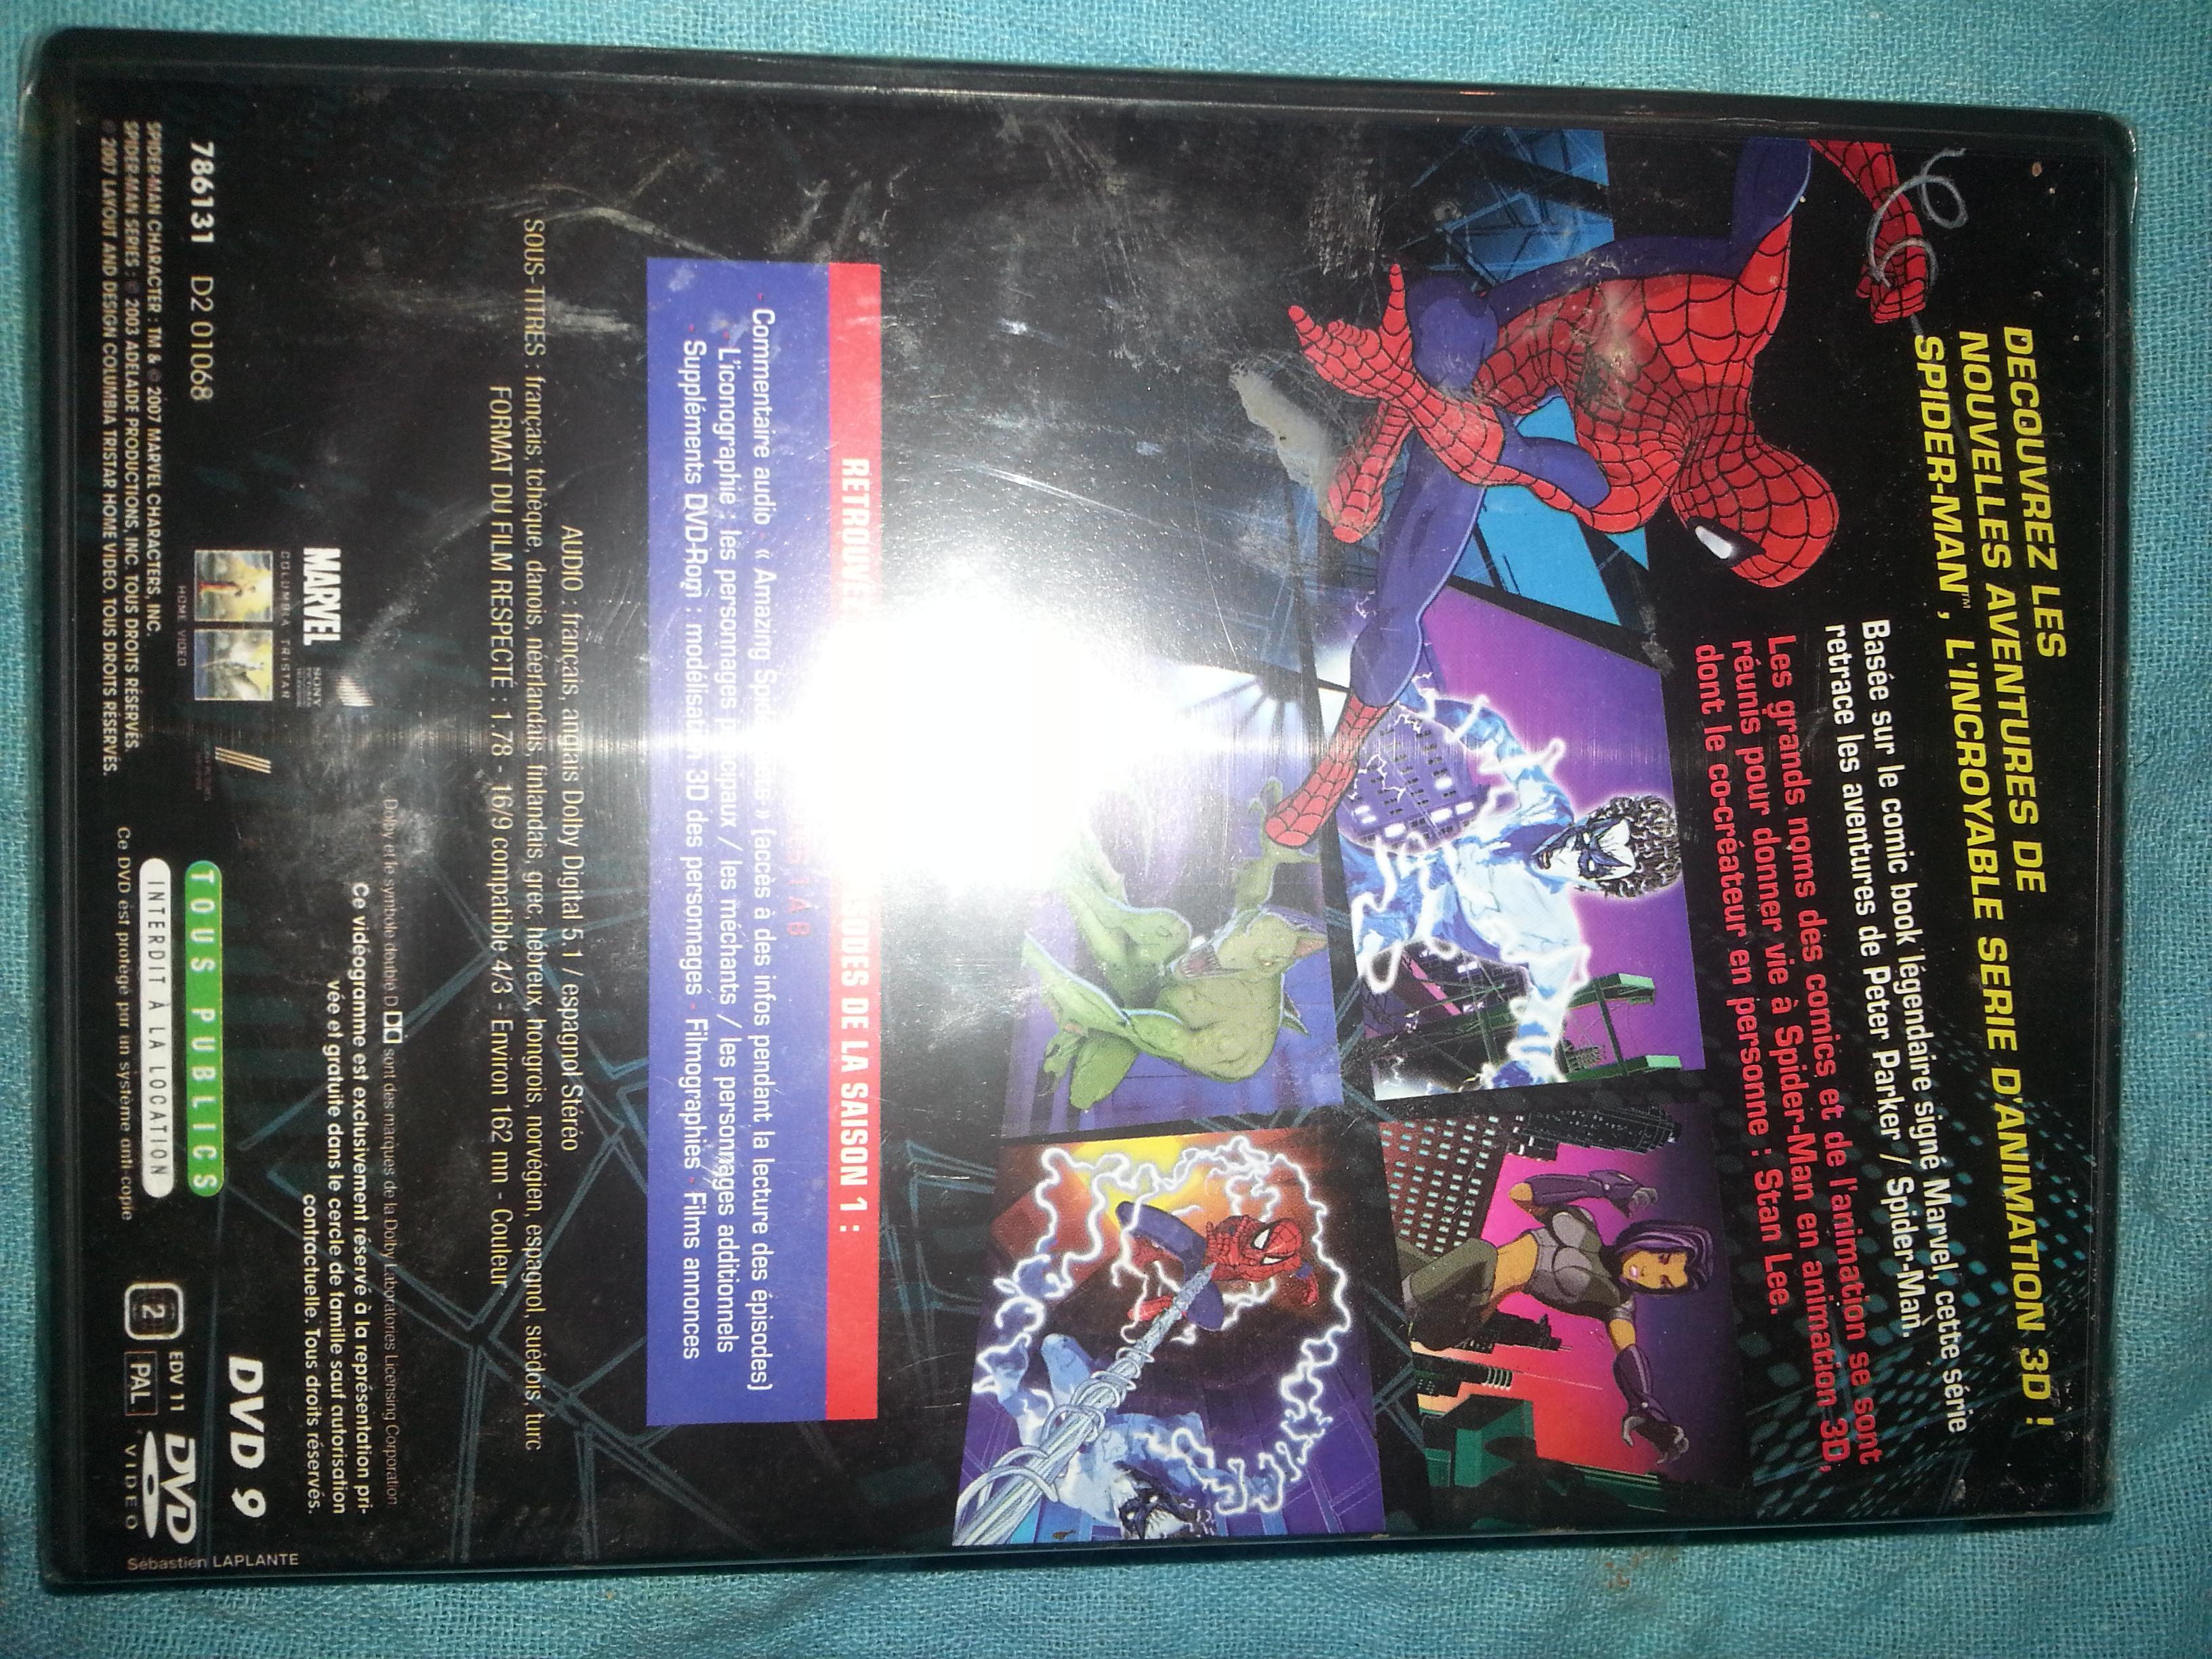 troc de troc dvd spiderman image 1